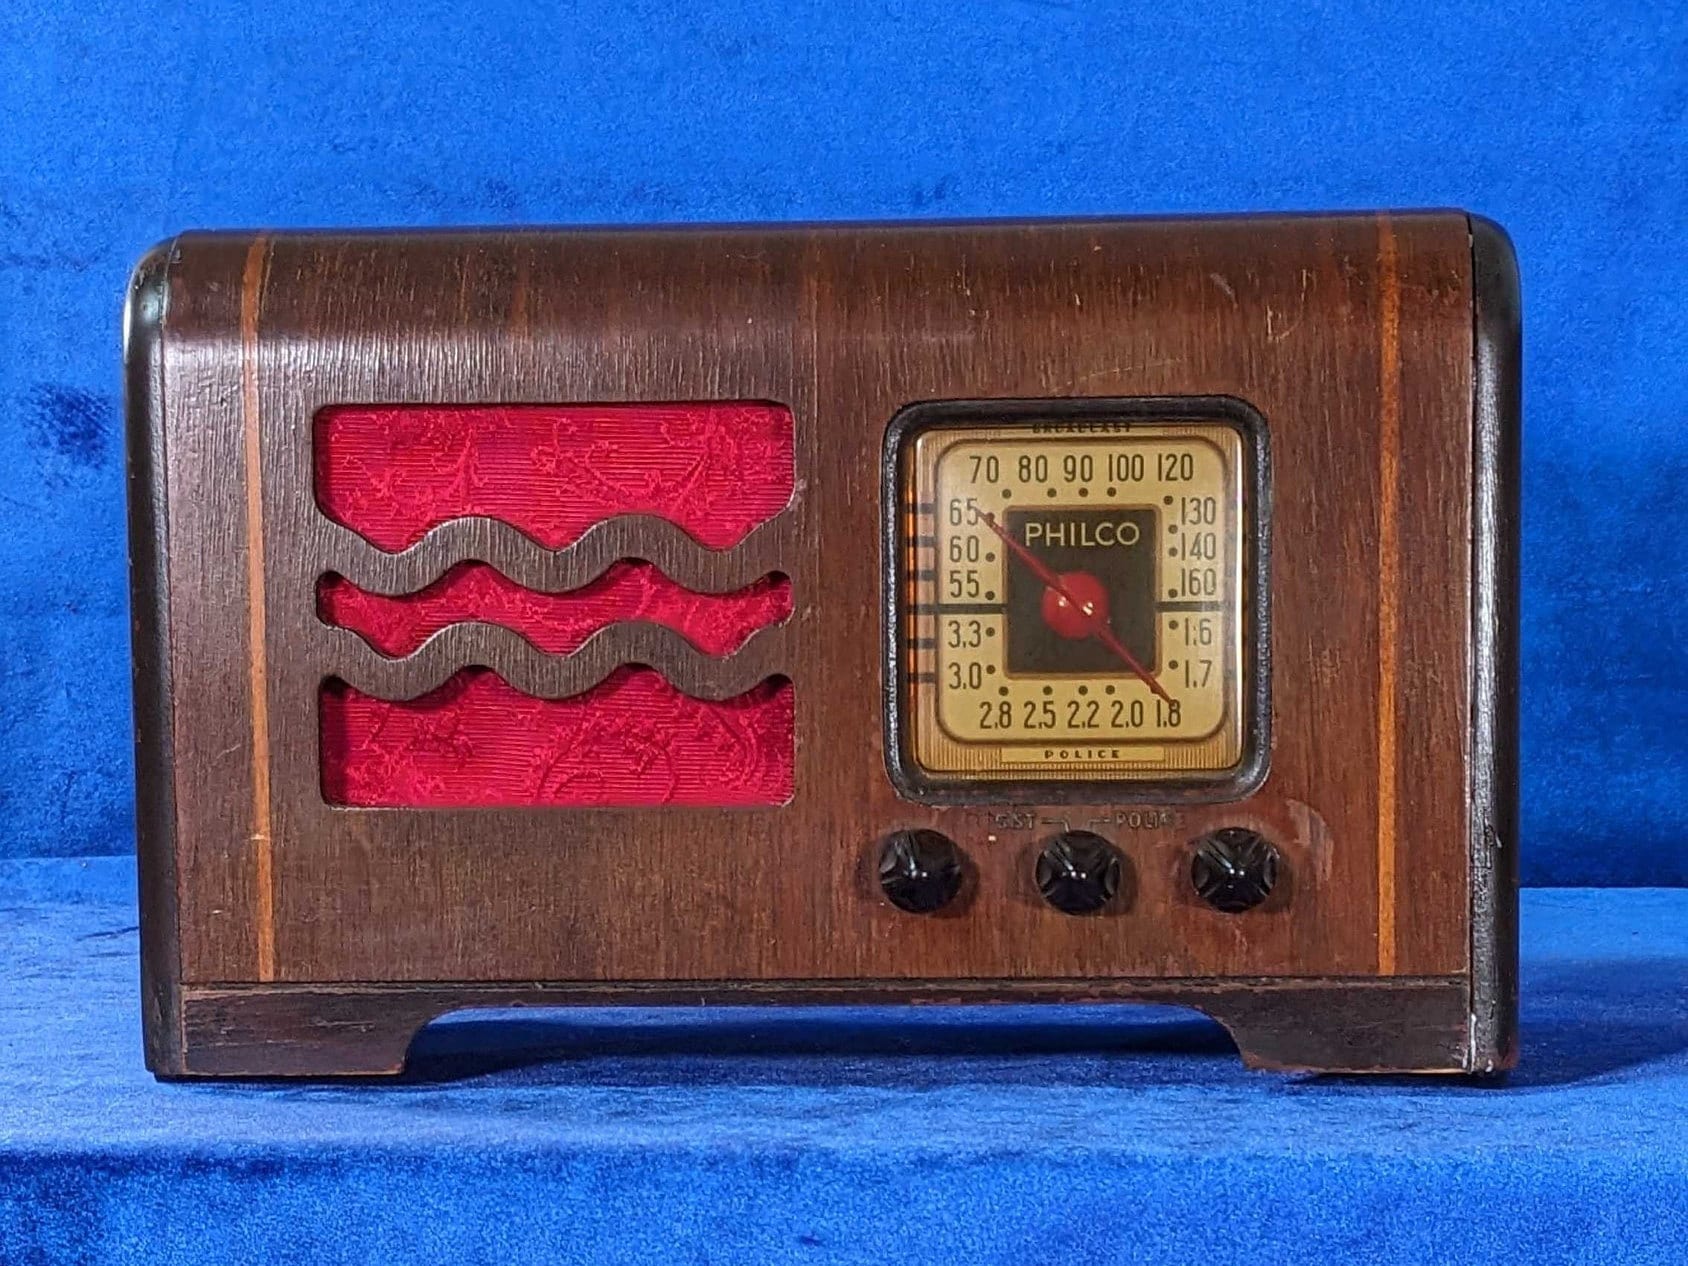 radio vela analogica rps560rd red